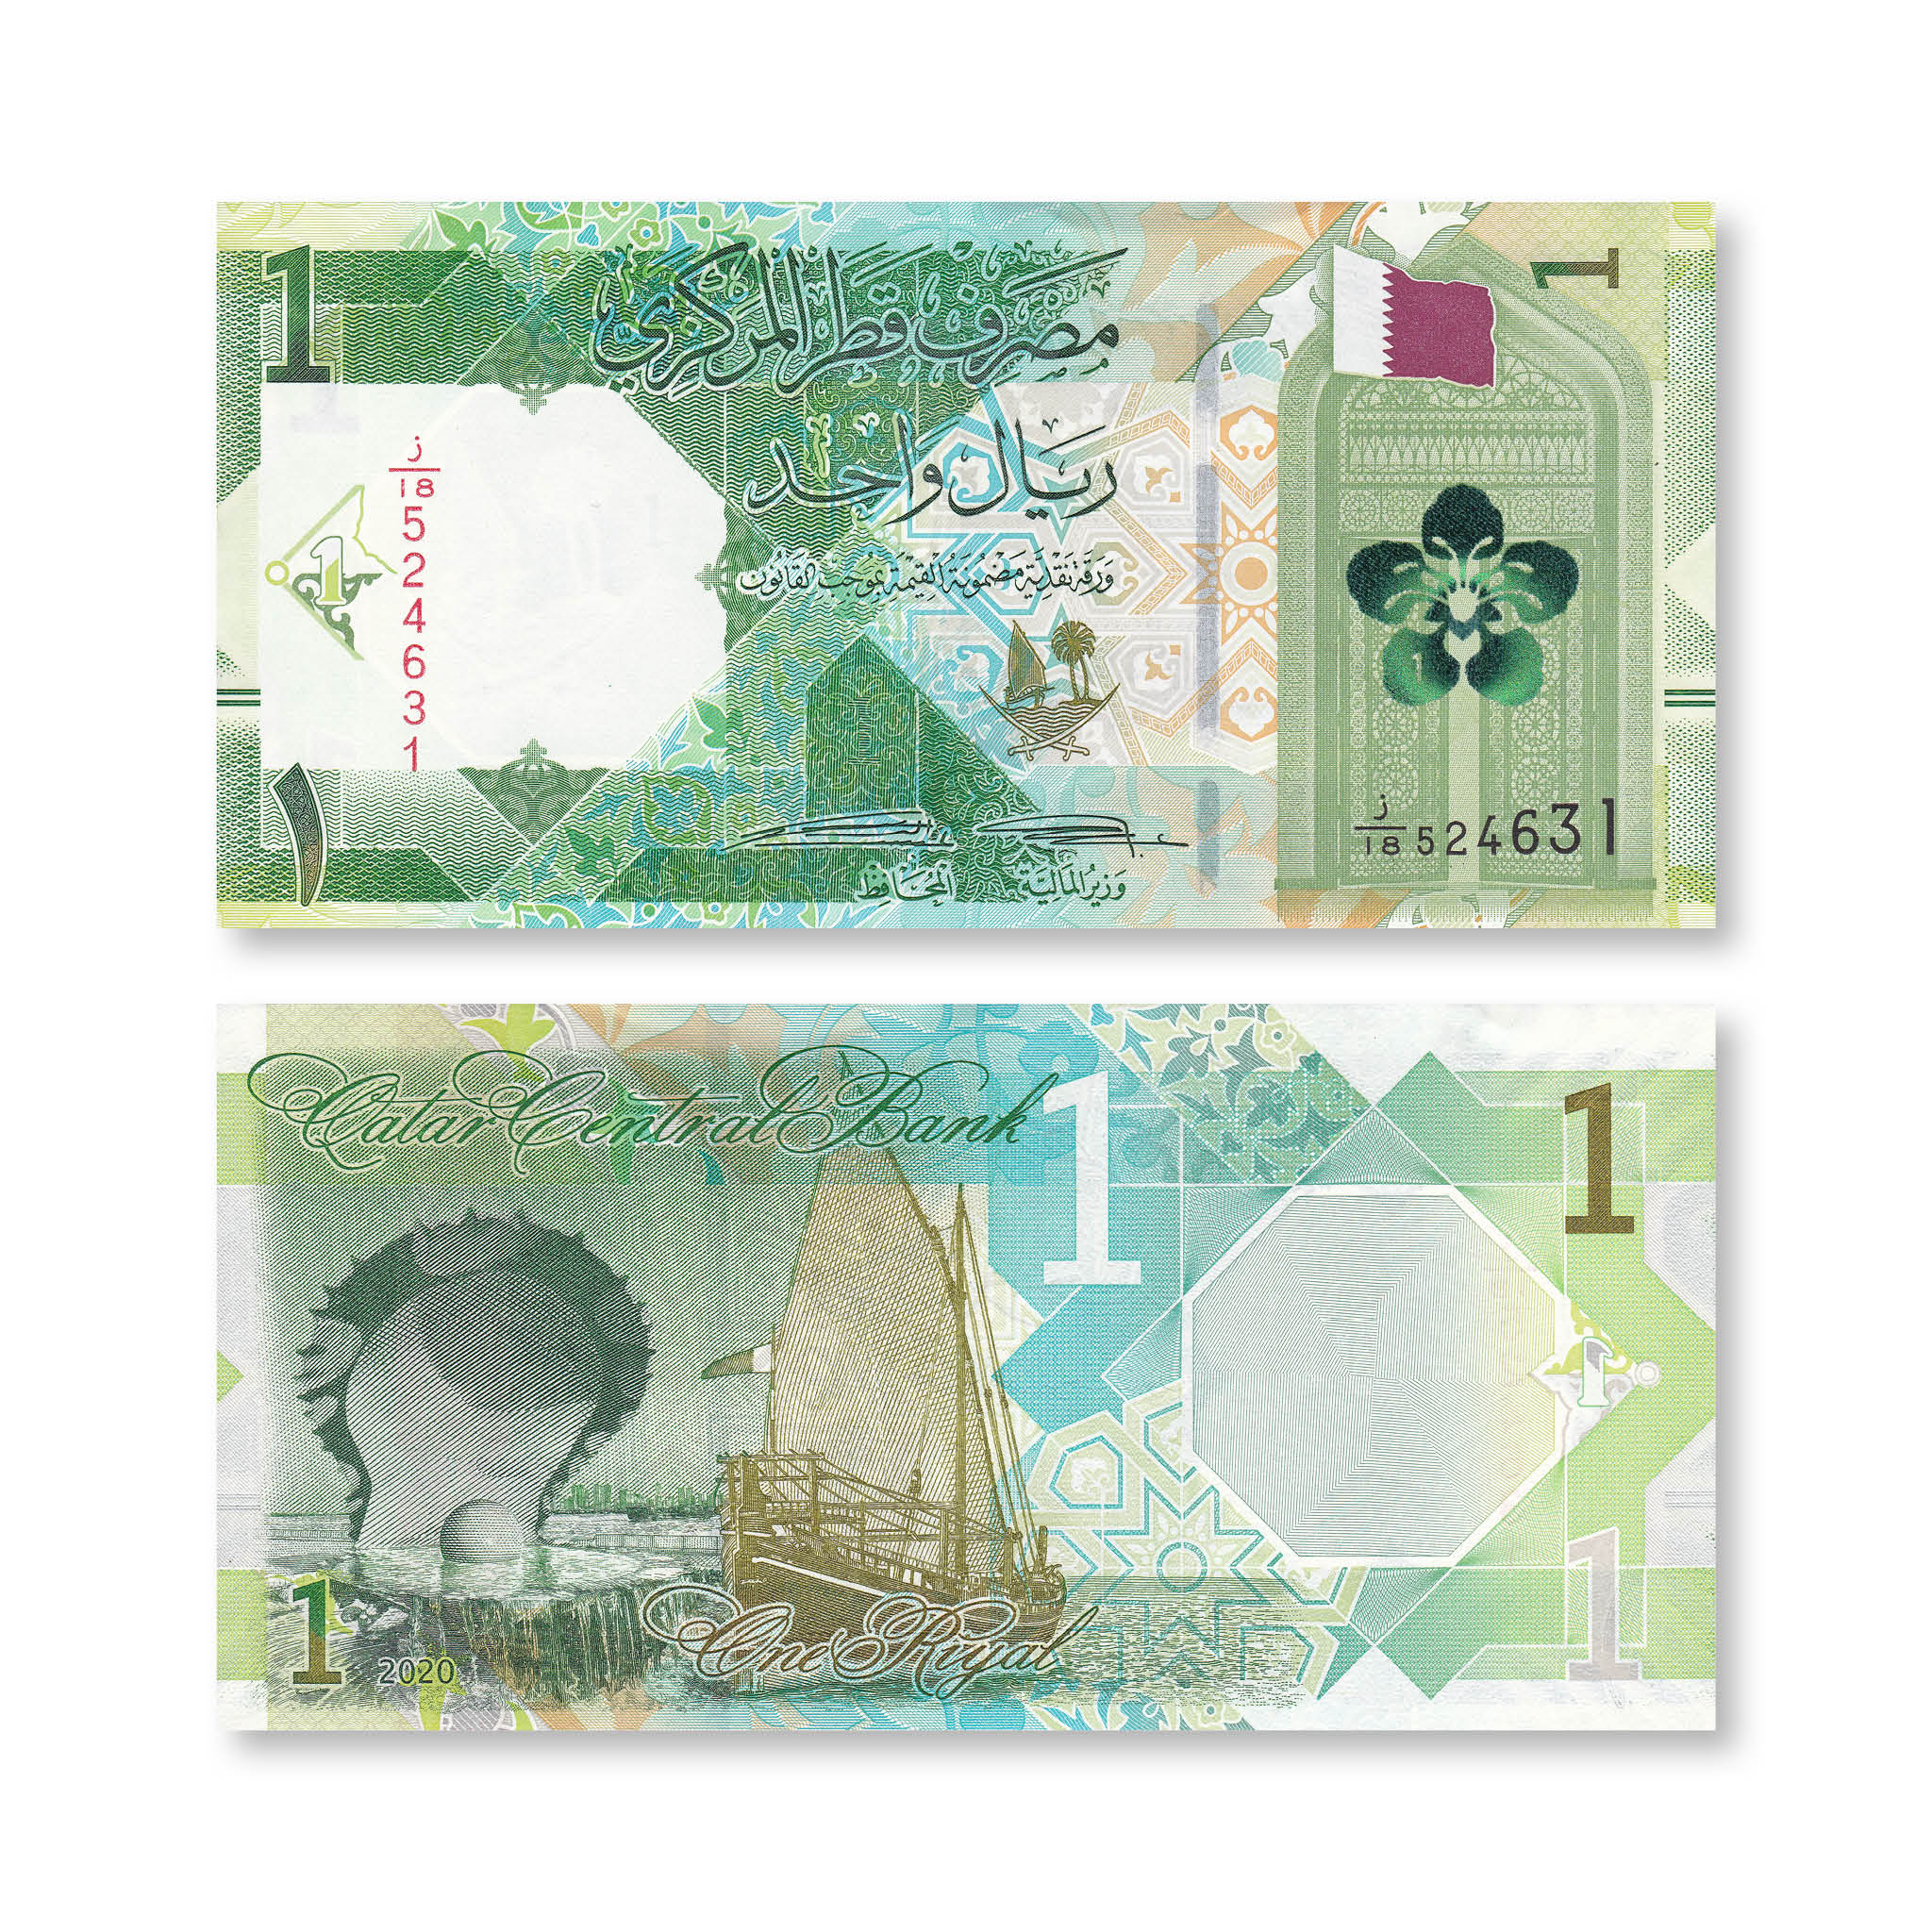 Qatar 1 Riyal, 2020, B219a, UNC - Robert's World Money - World Banknotes